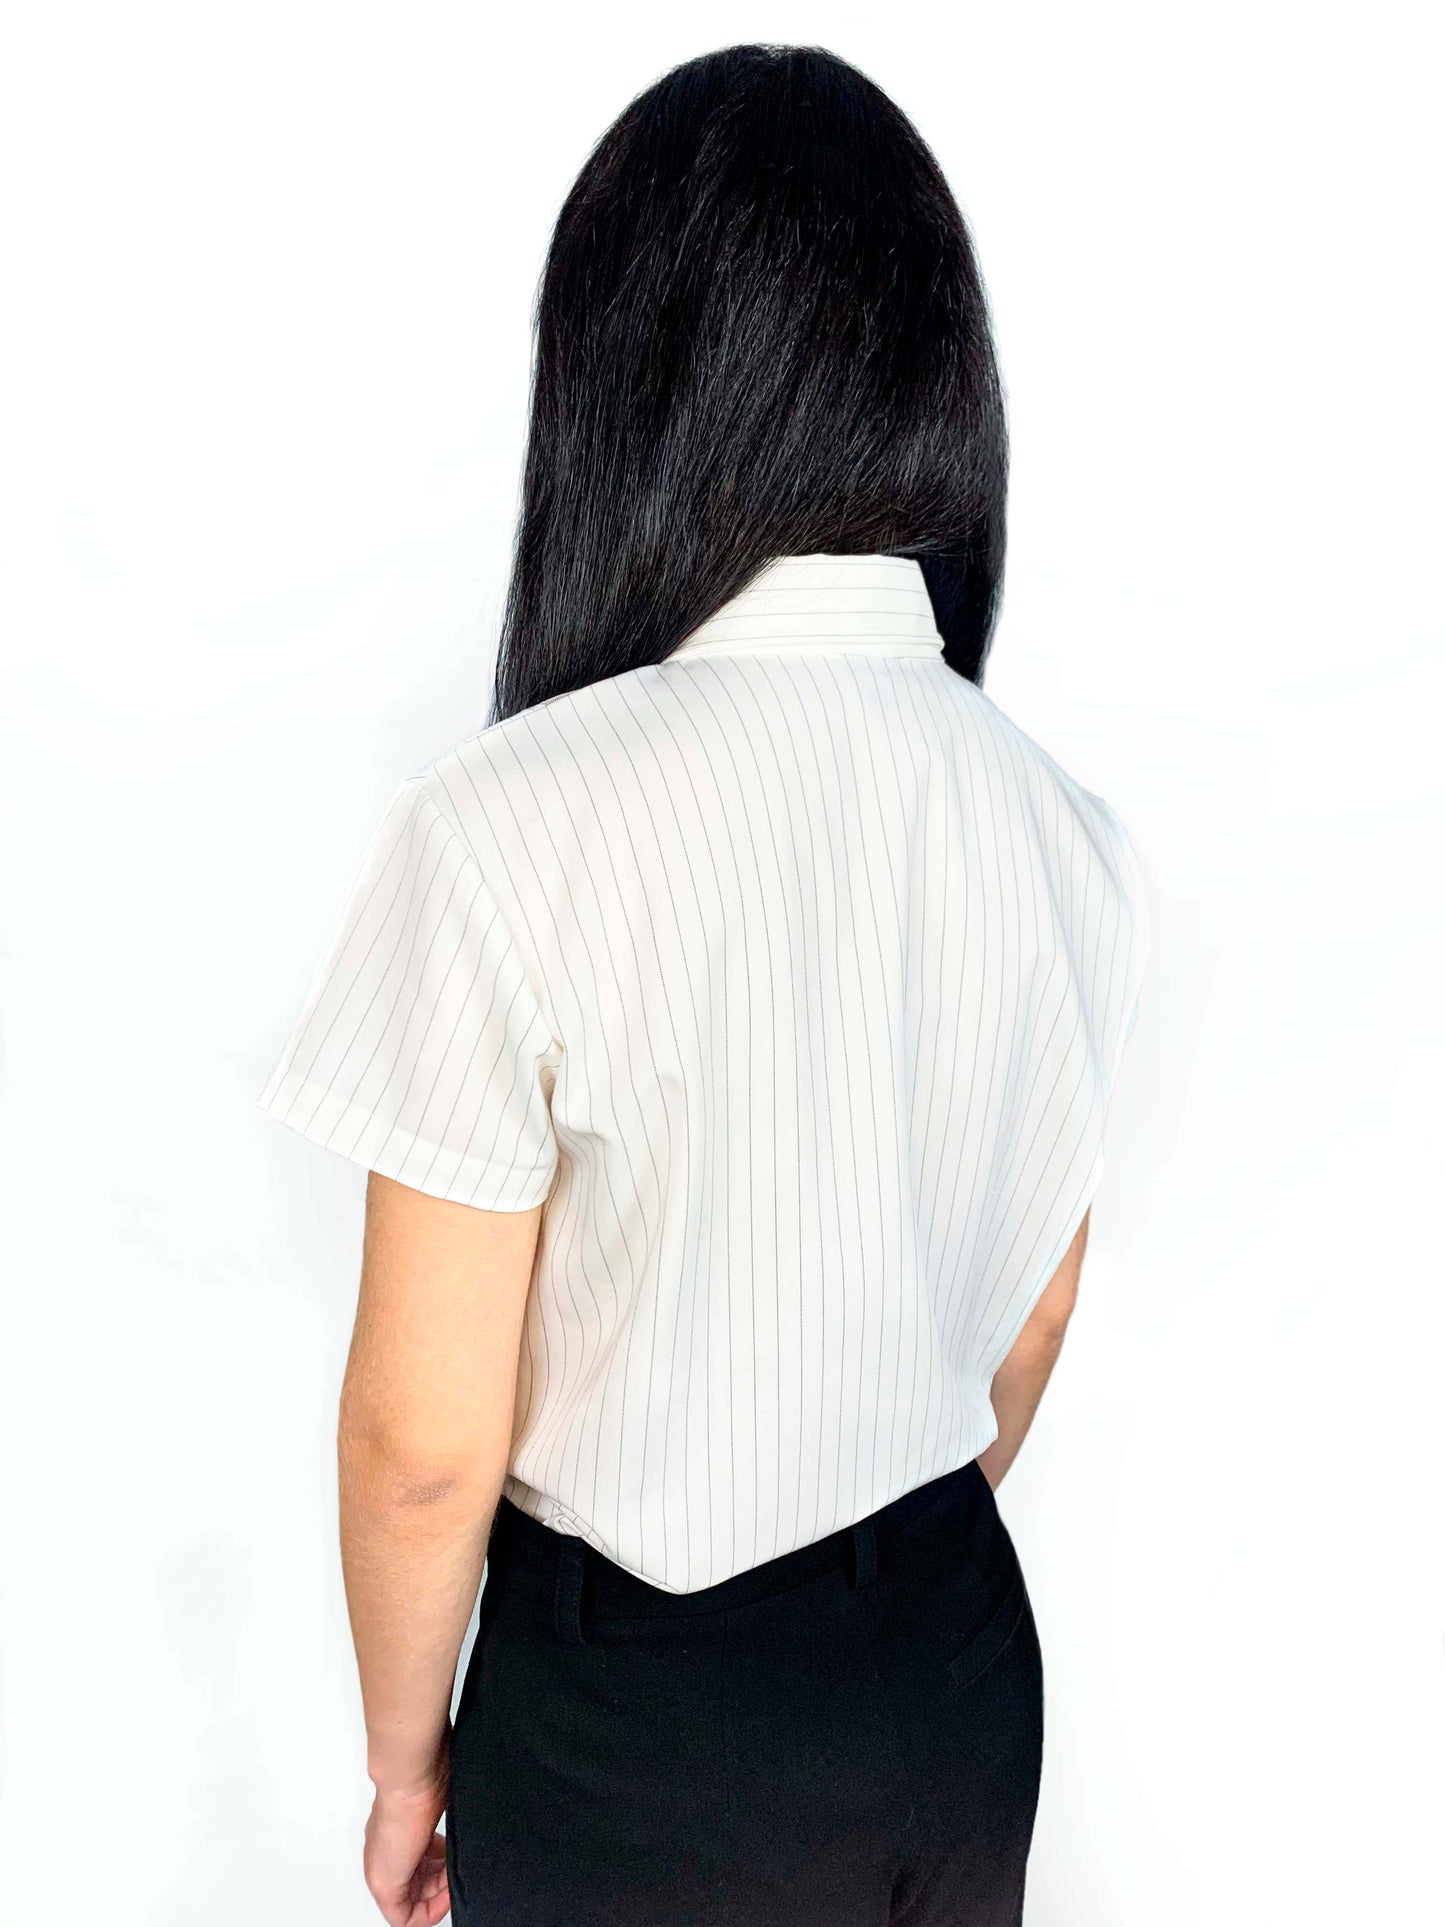 Chalk Stripe White Shirt Short Sleeve Unisex